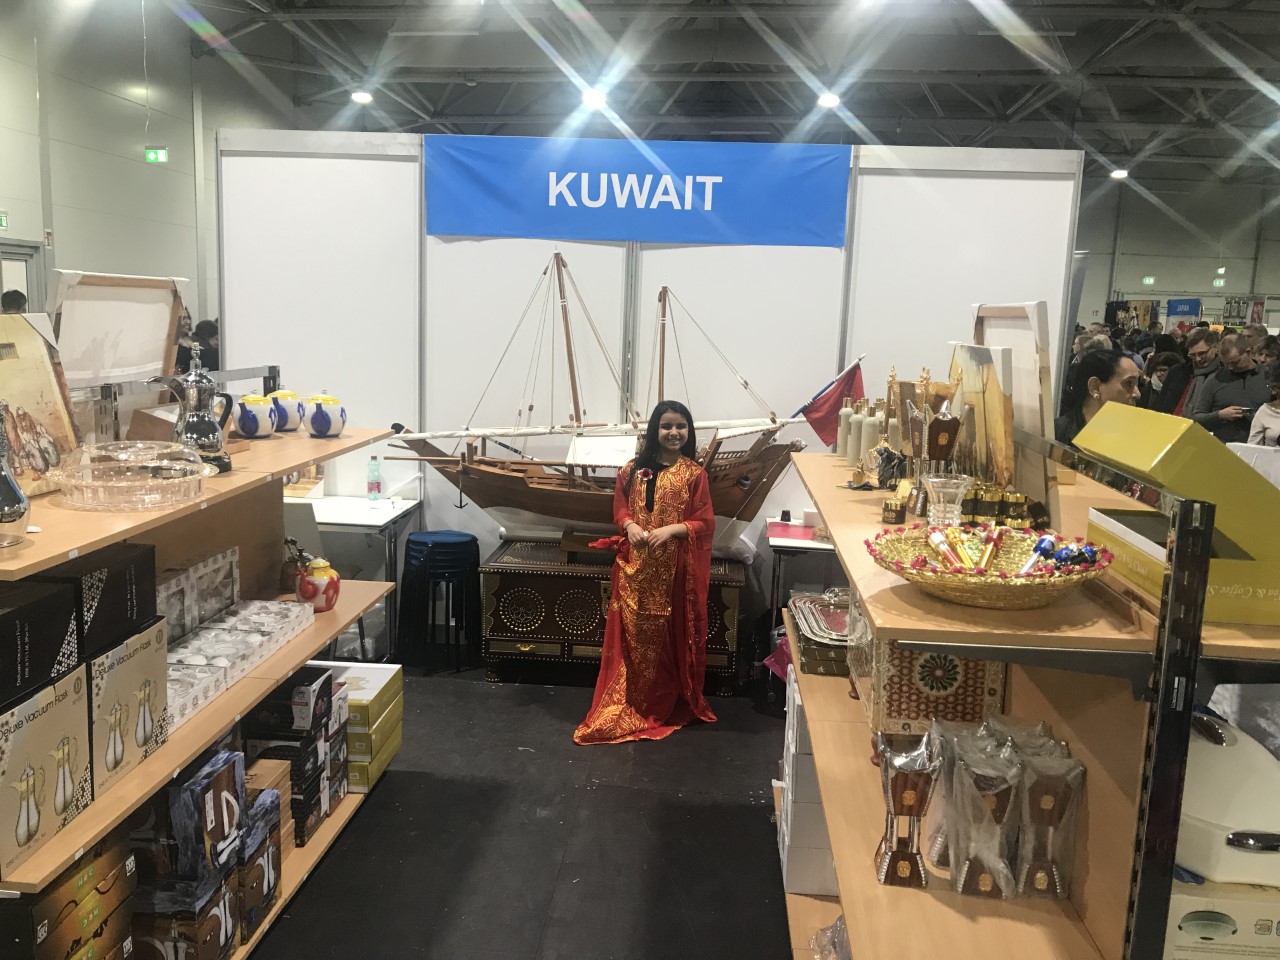 Kuwaiti pavilion in the International Festival Bazaar